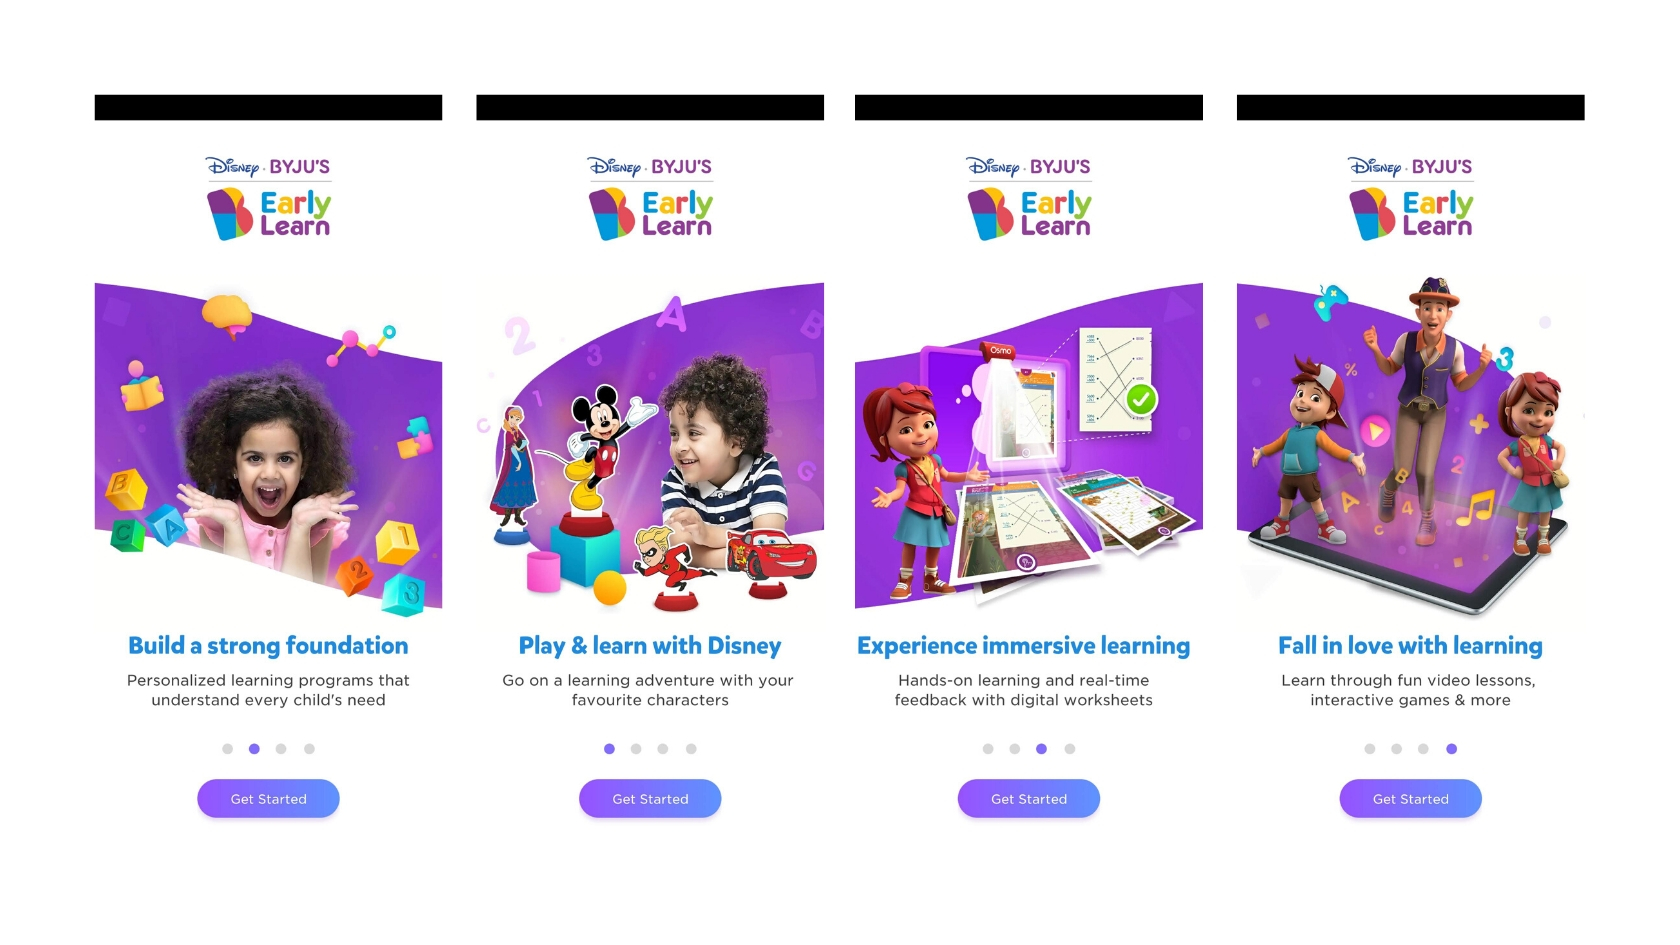 byju-s-early-learn-app-now-available-for-kindergarten-kids-techradar